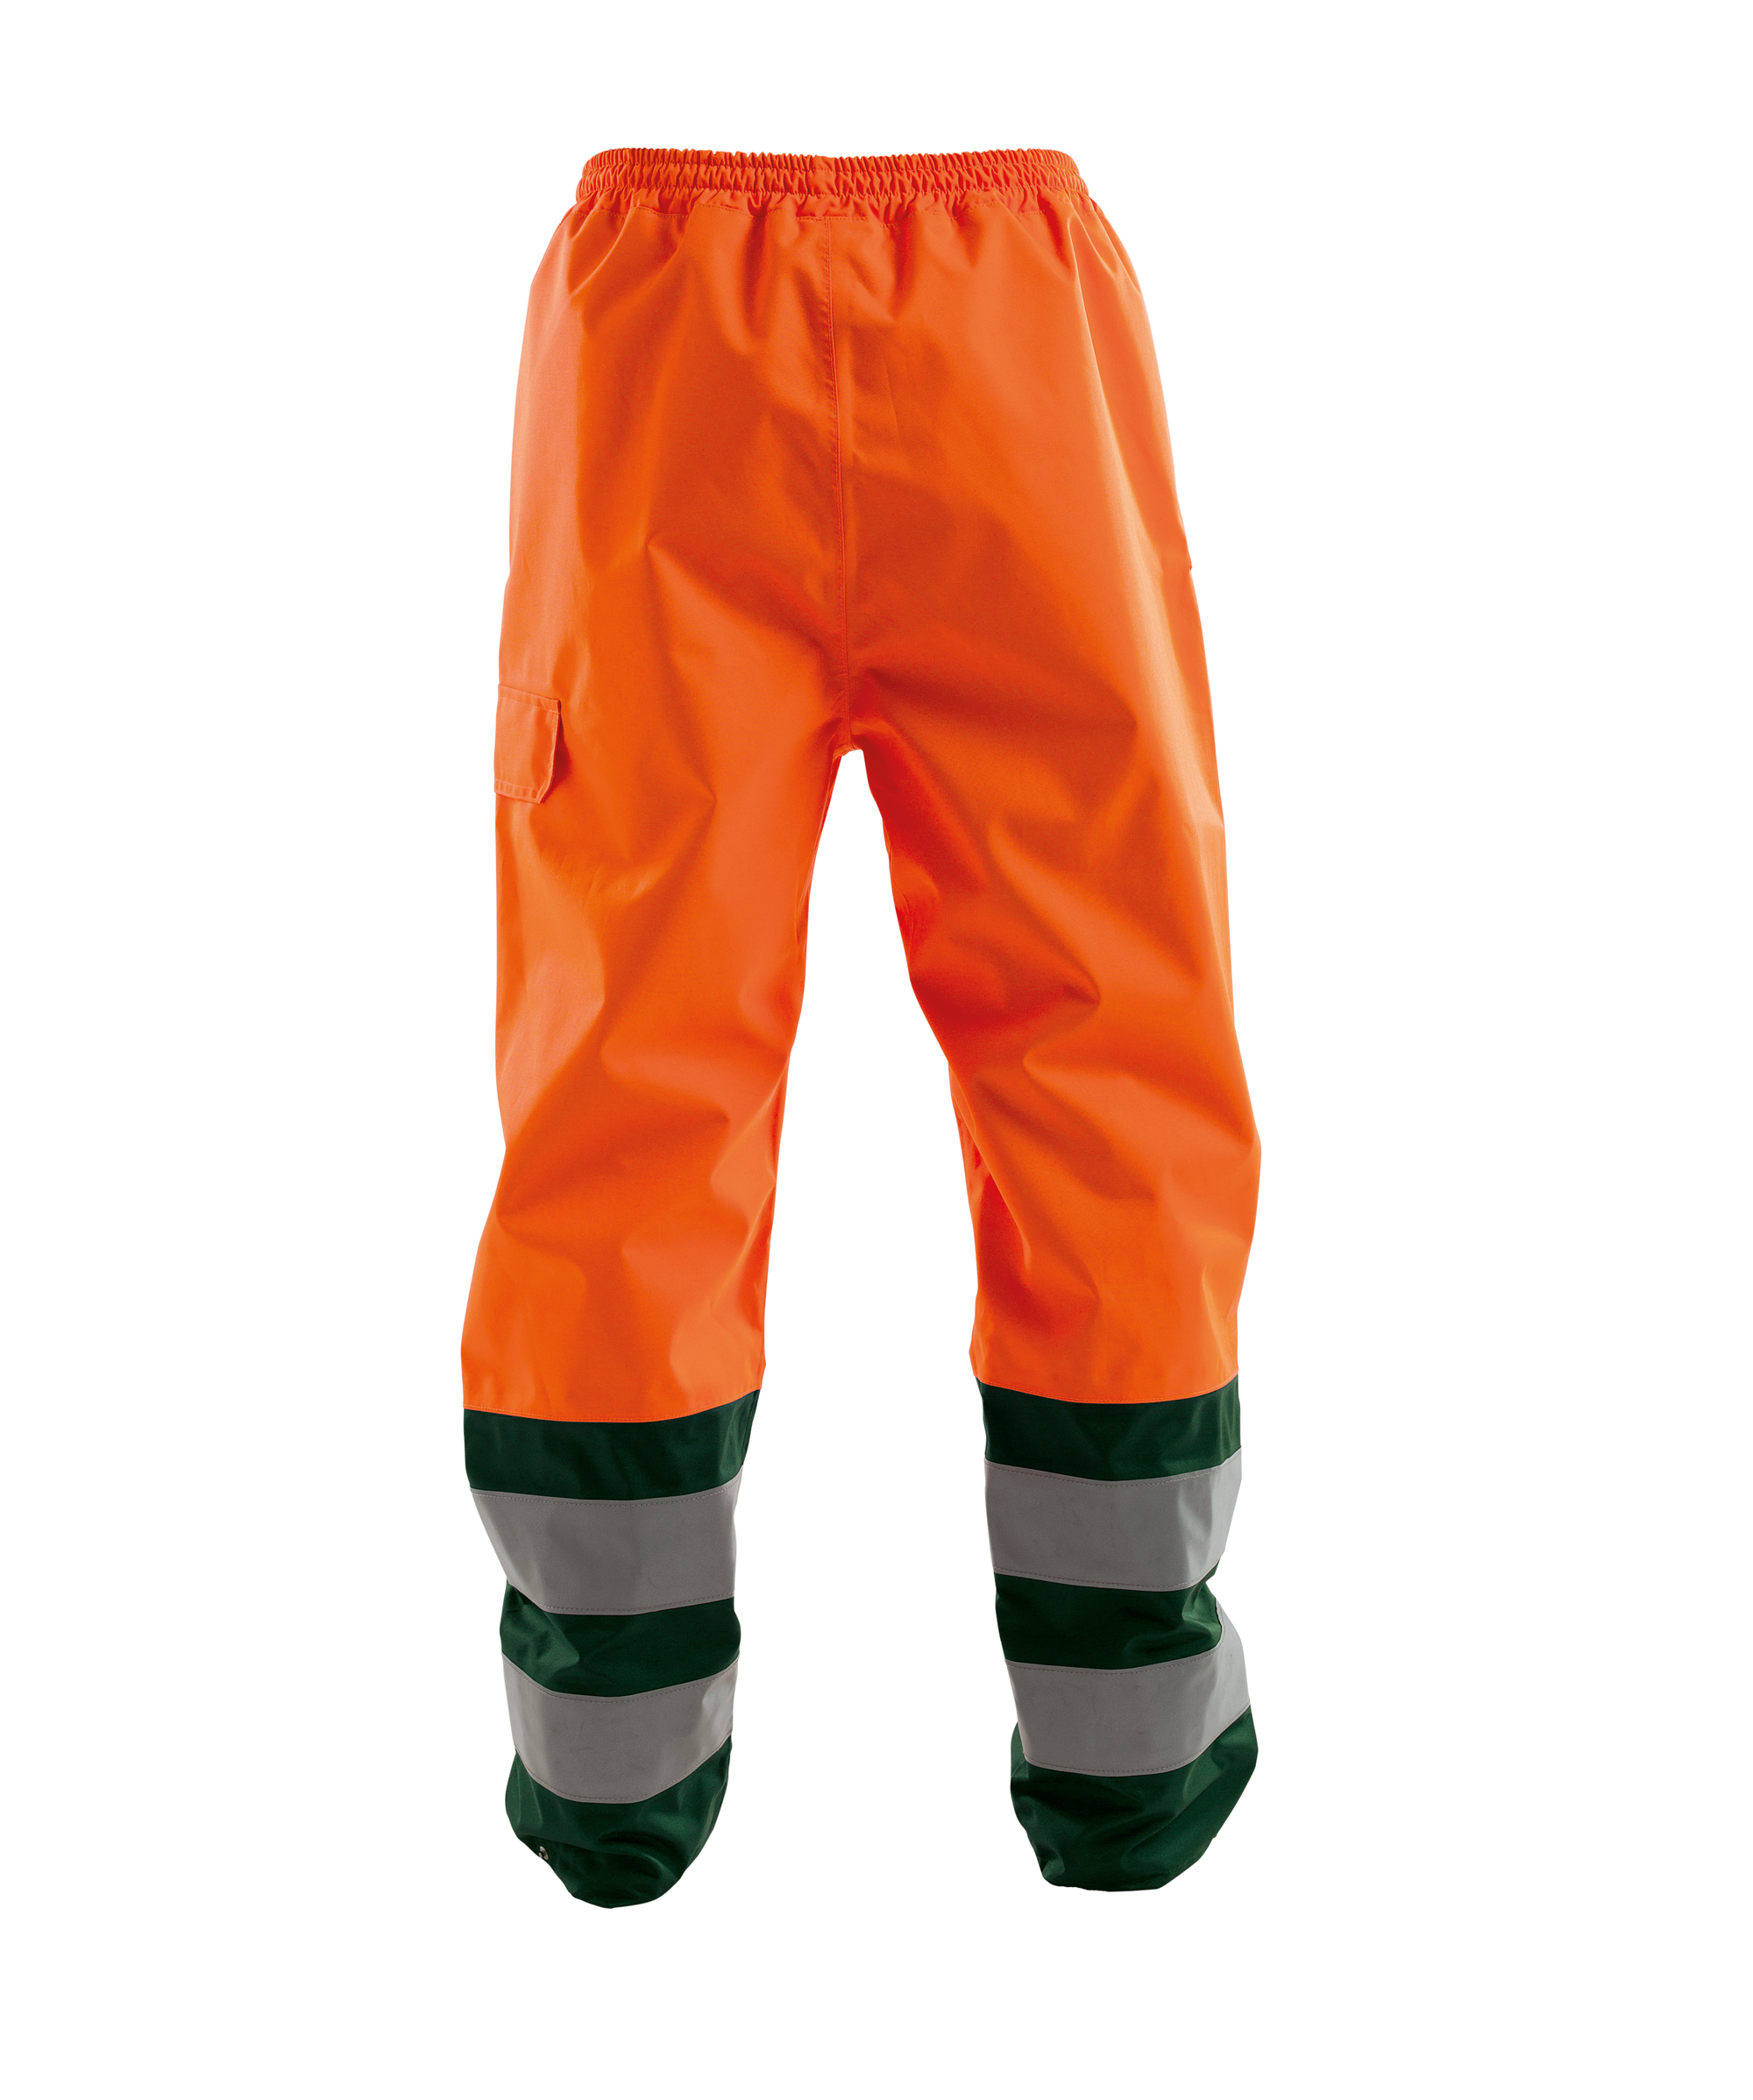 sola_high-visibility-waterproof-work-trousers_fluo-orange-bottle-green_back.jpg